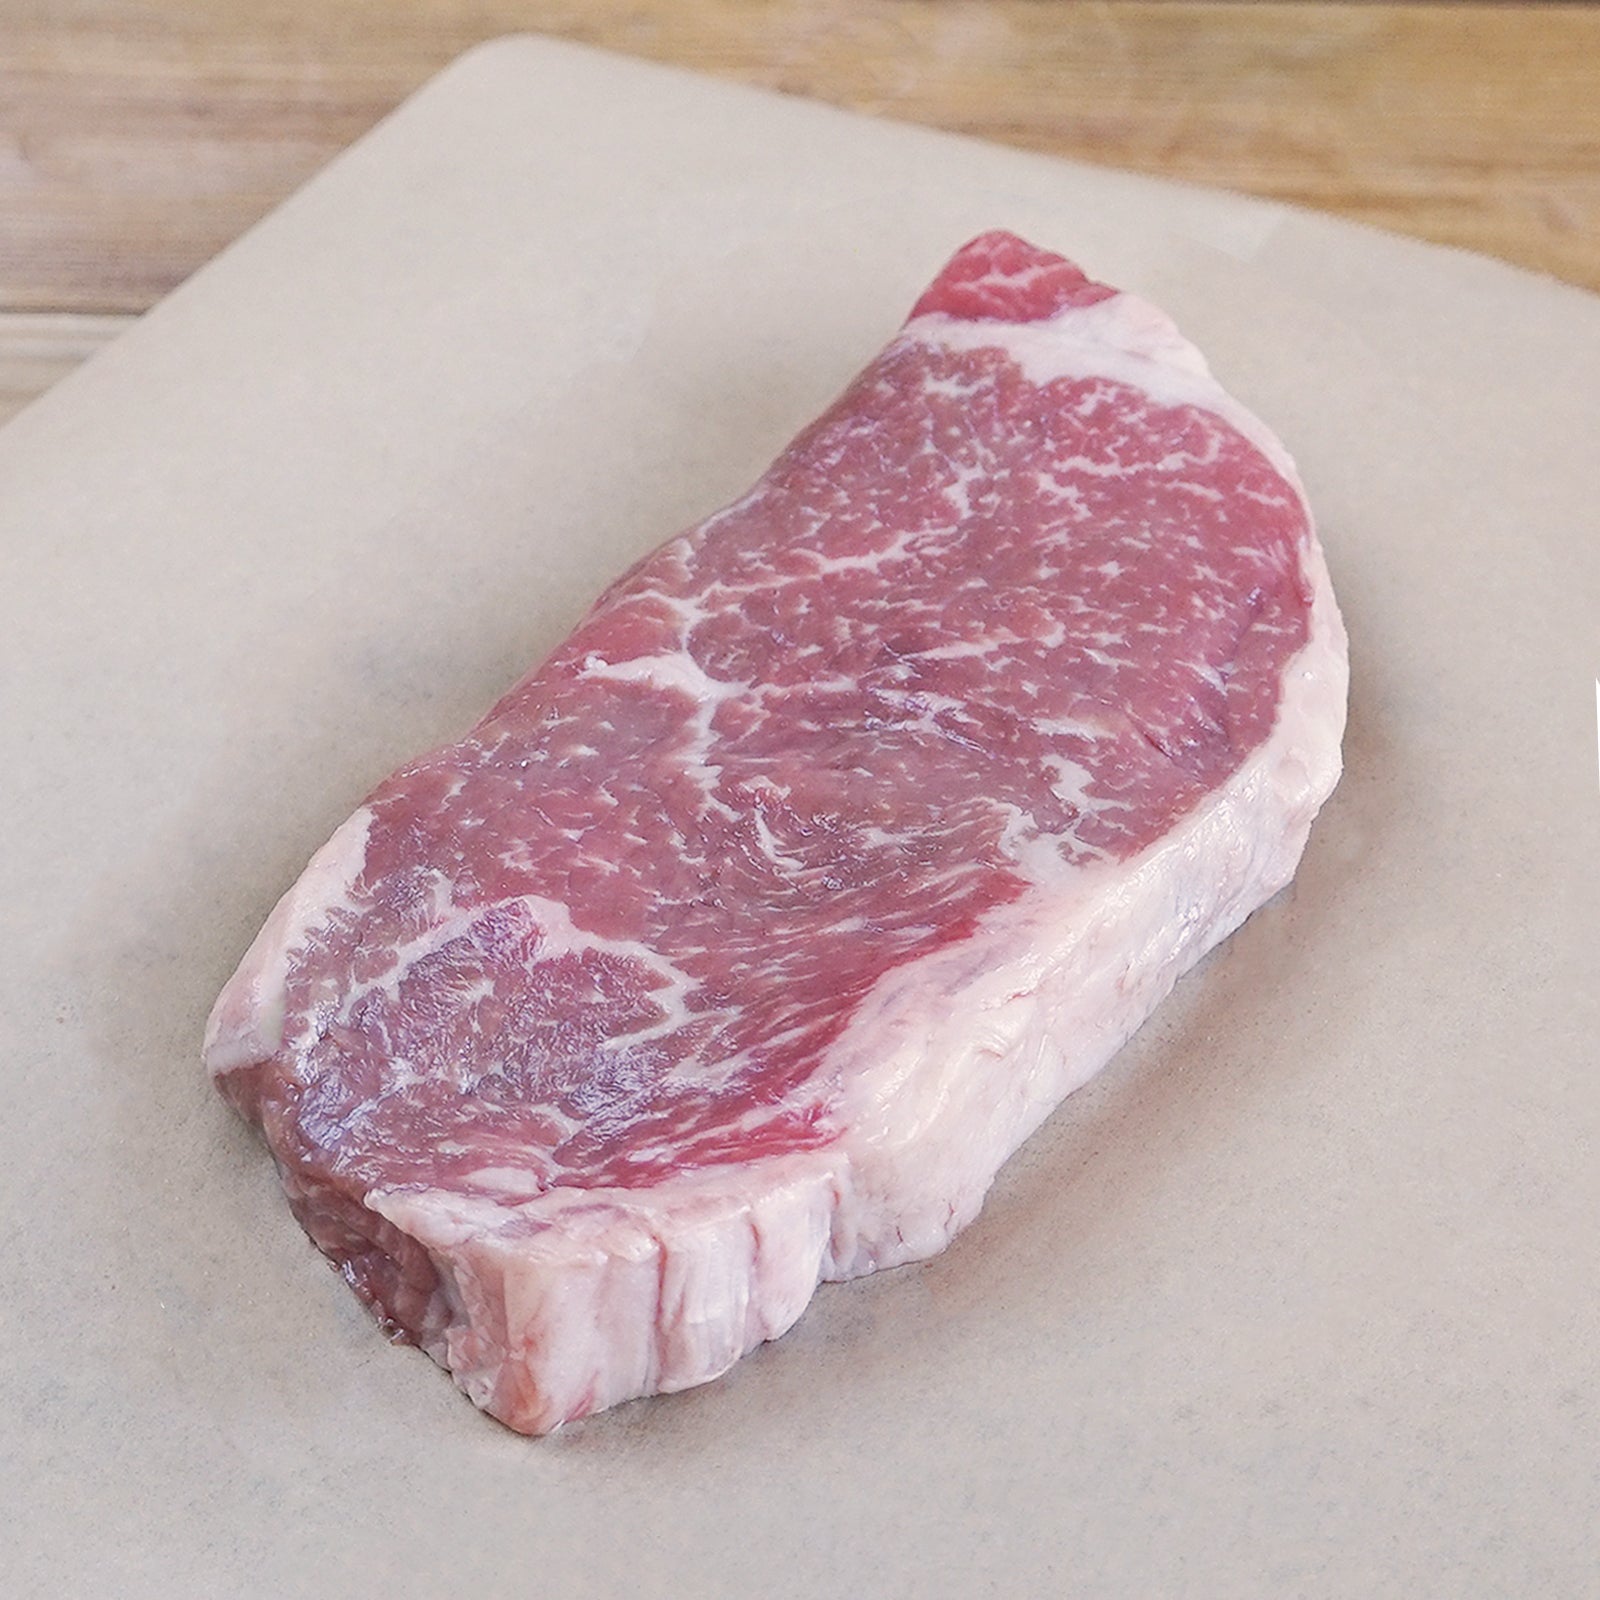 Morgan Ranch USDA Prime Beef New York Strip Steak (200g) - Horizon Farms